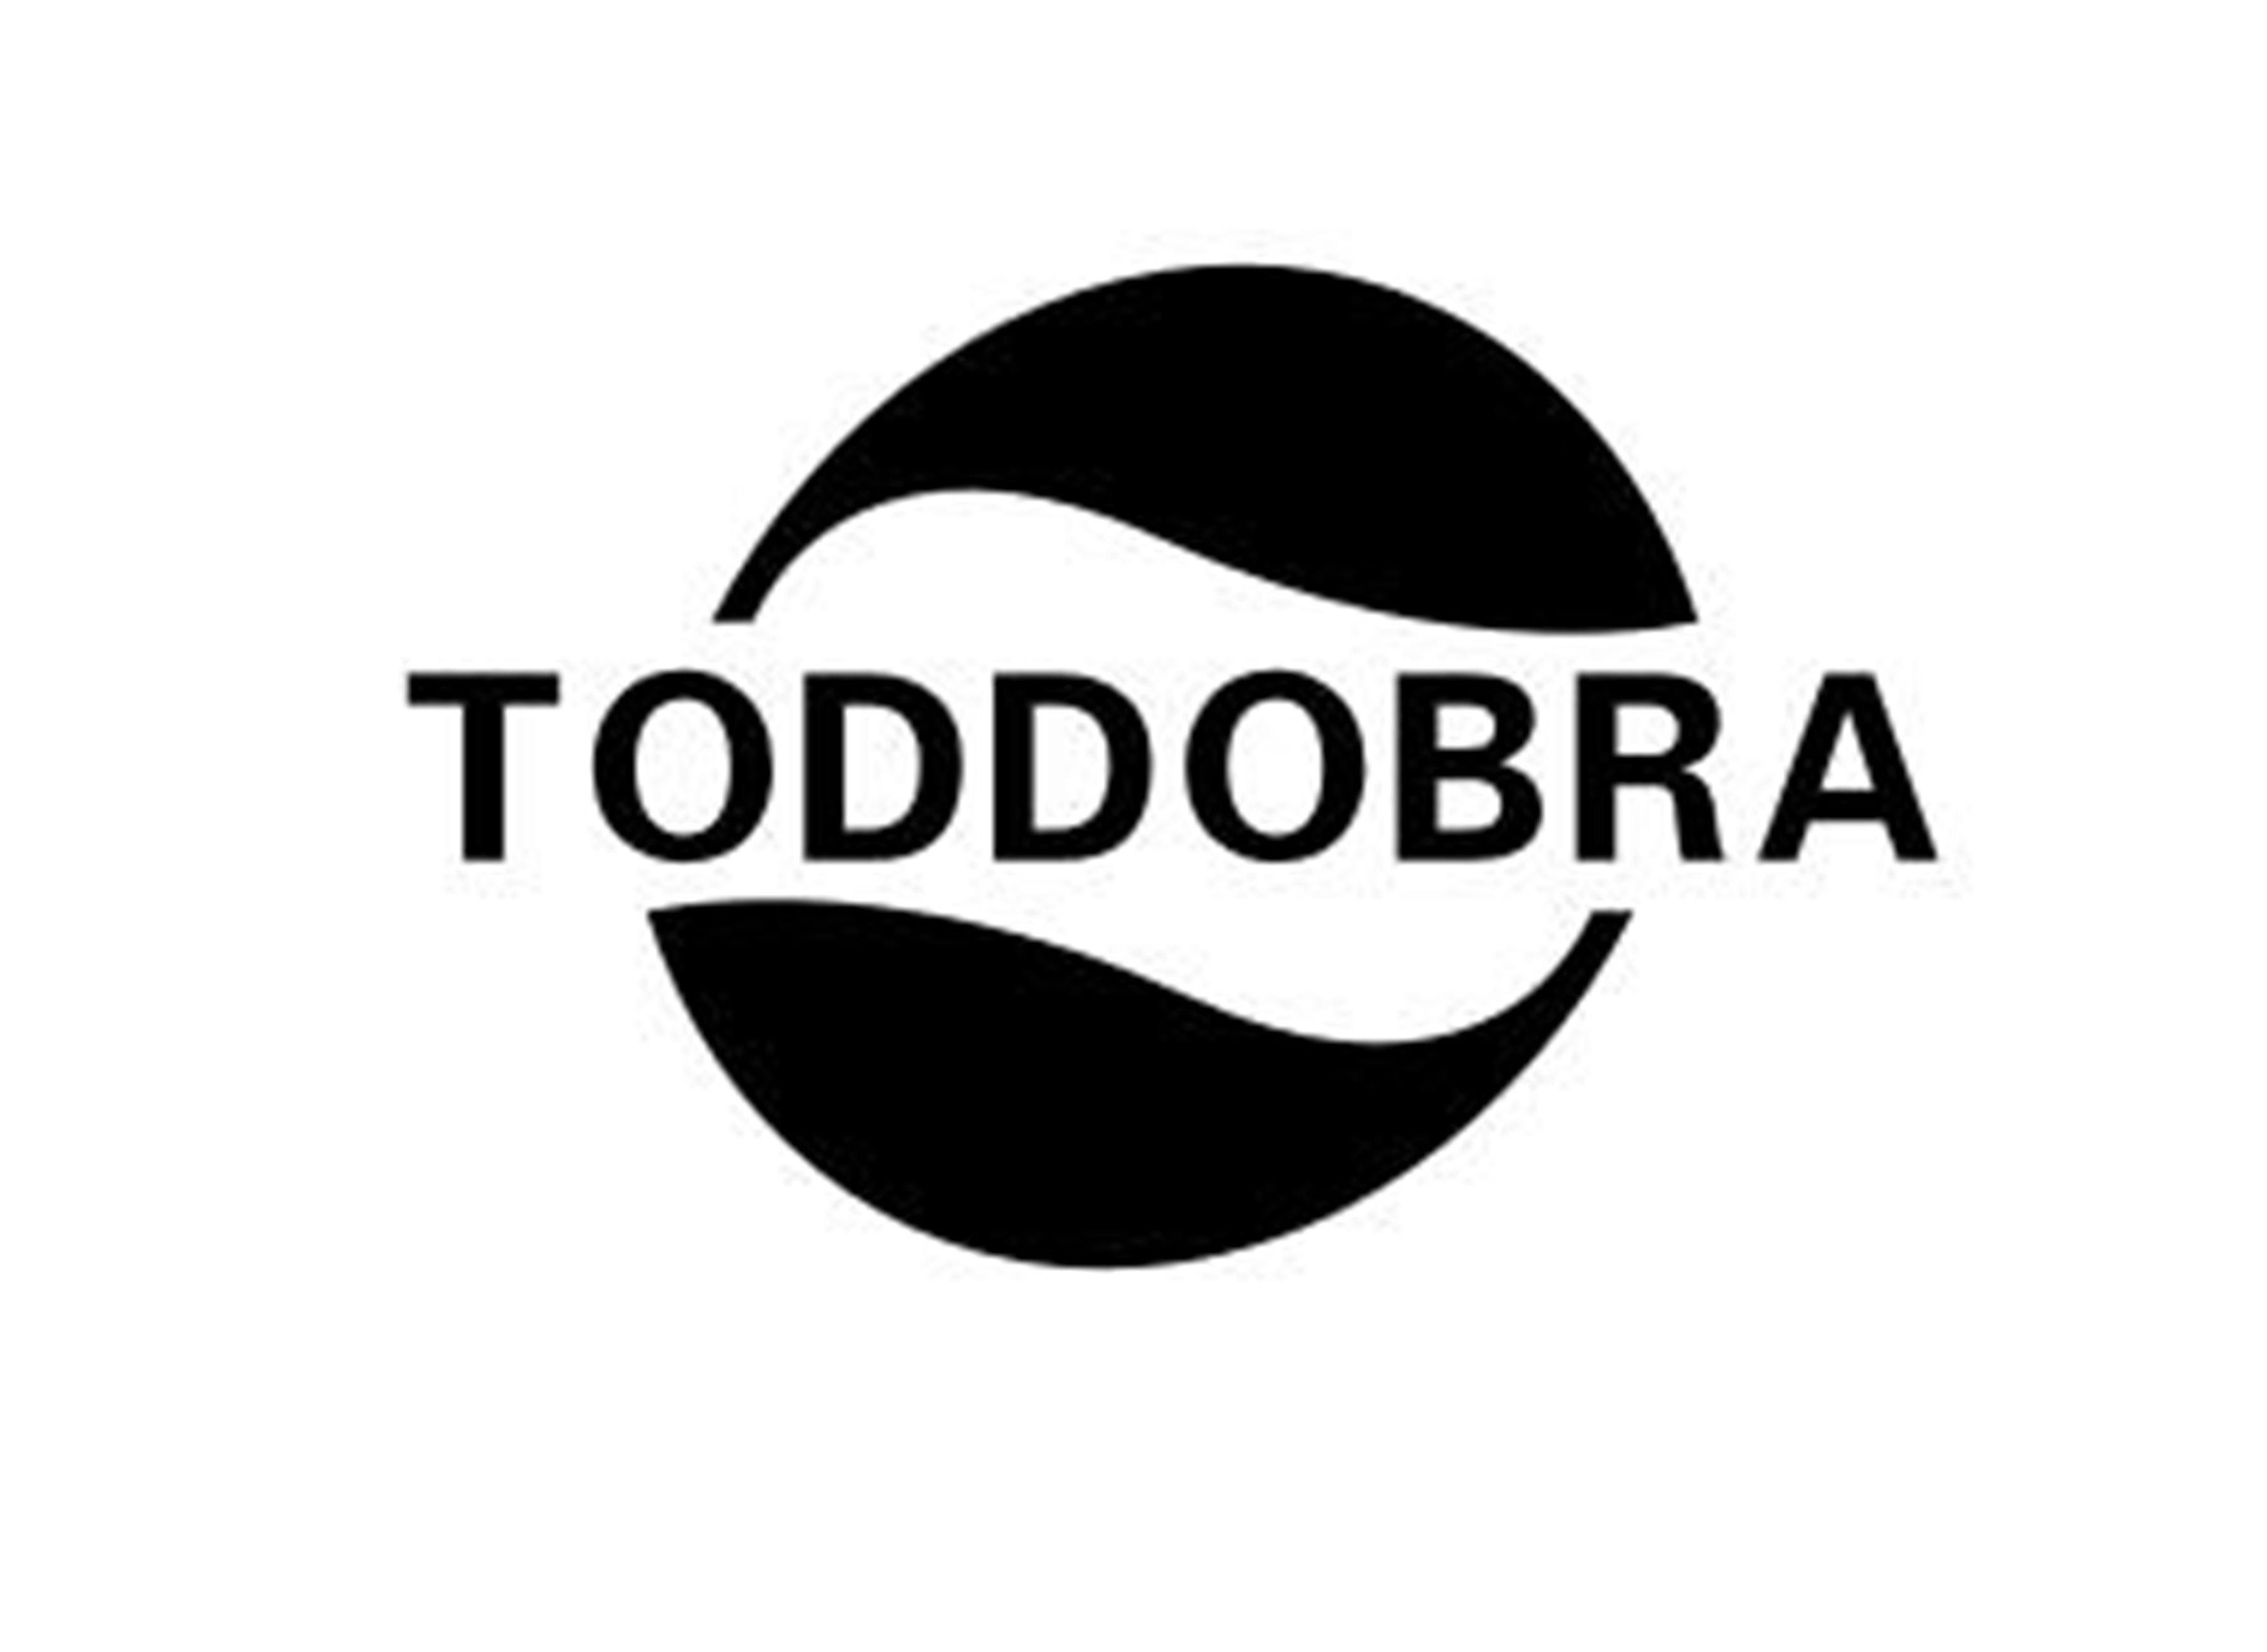 TODDOBRA